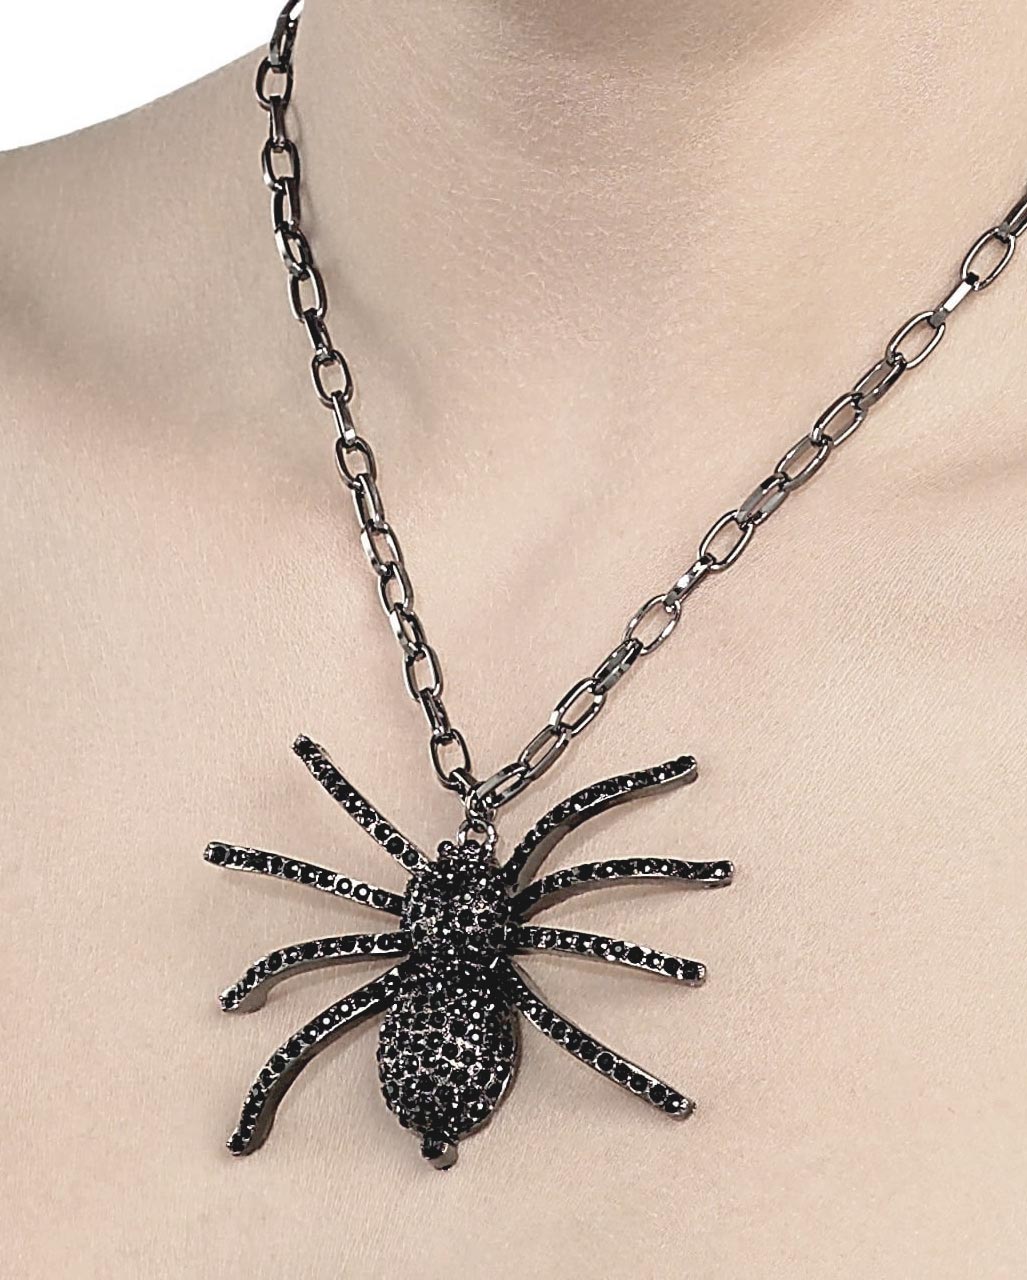 Fvermecky Halloween Rhinestones Spider Pendant Necklace for Women Men